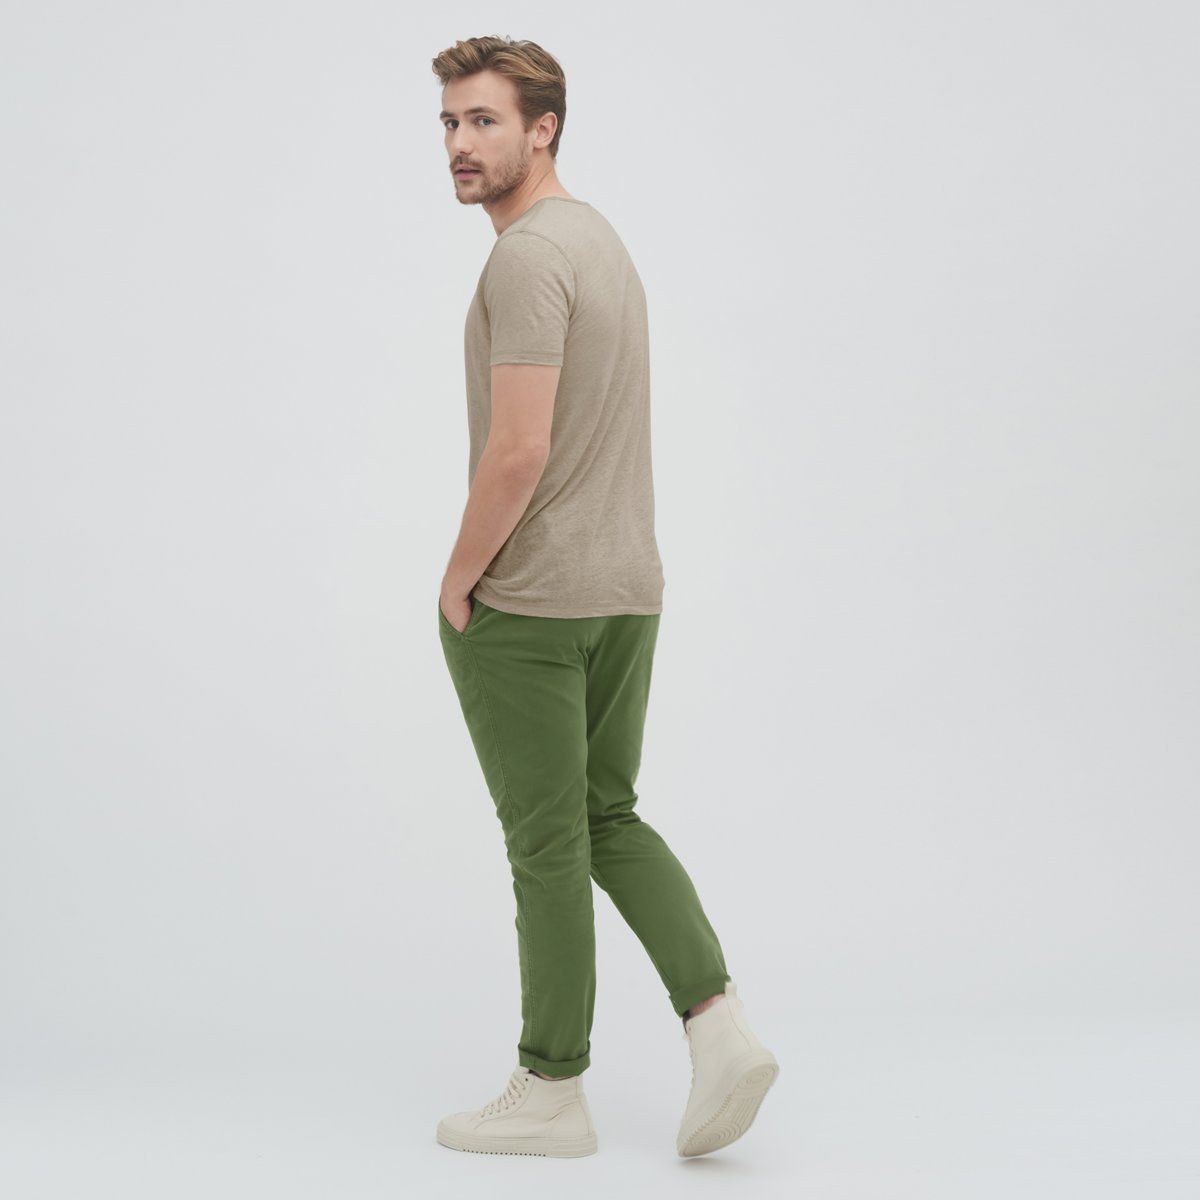 CRAFTS Tage Natural LIVING Leinen-Stoff T-Shirt warme Leichter ANDY für Linen